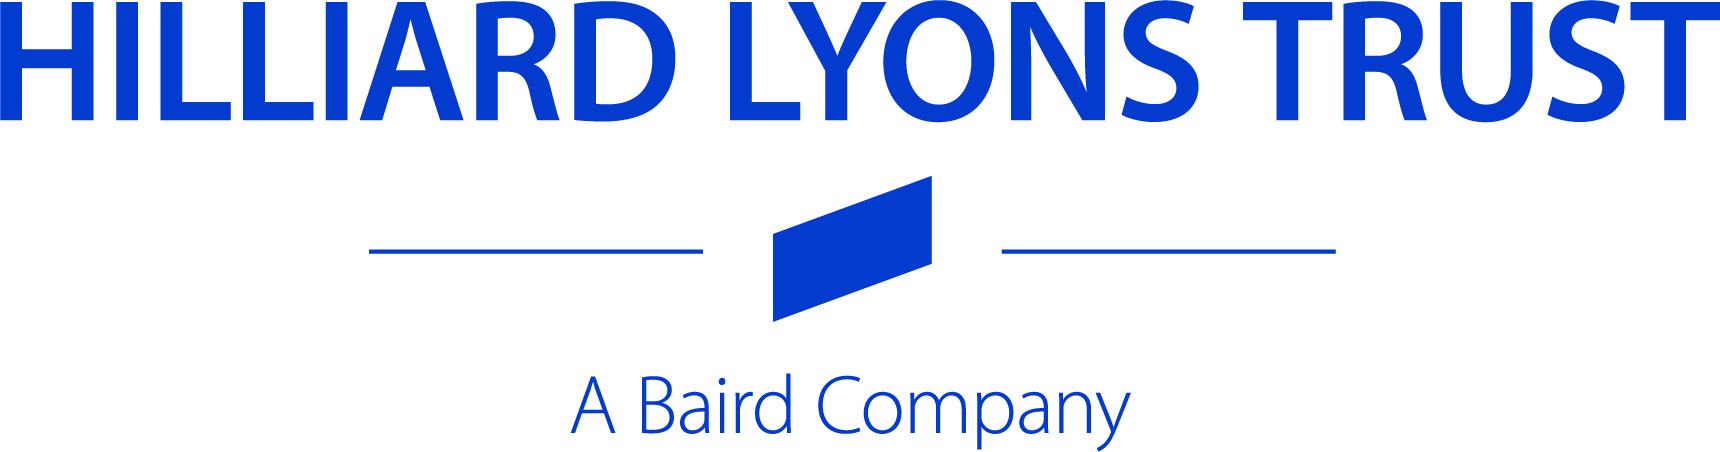 Hilliard Lyons Trust